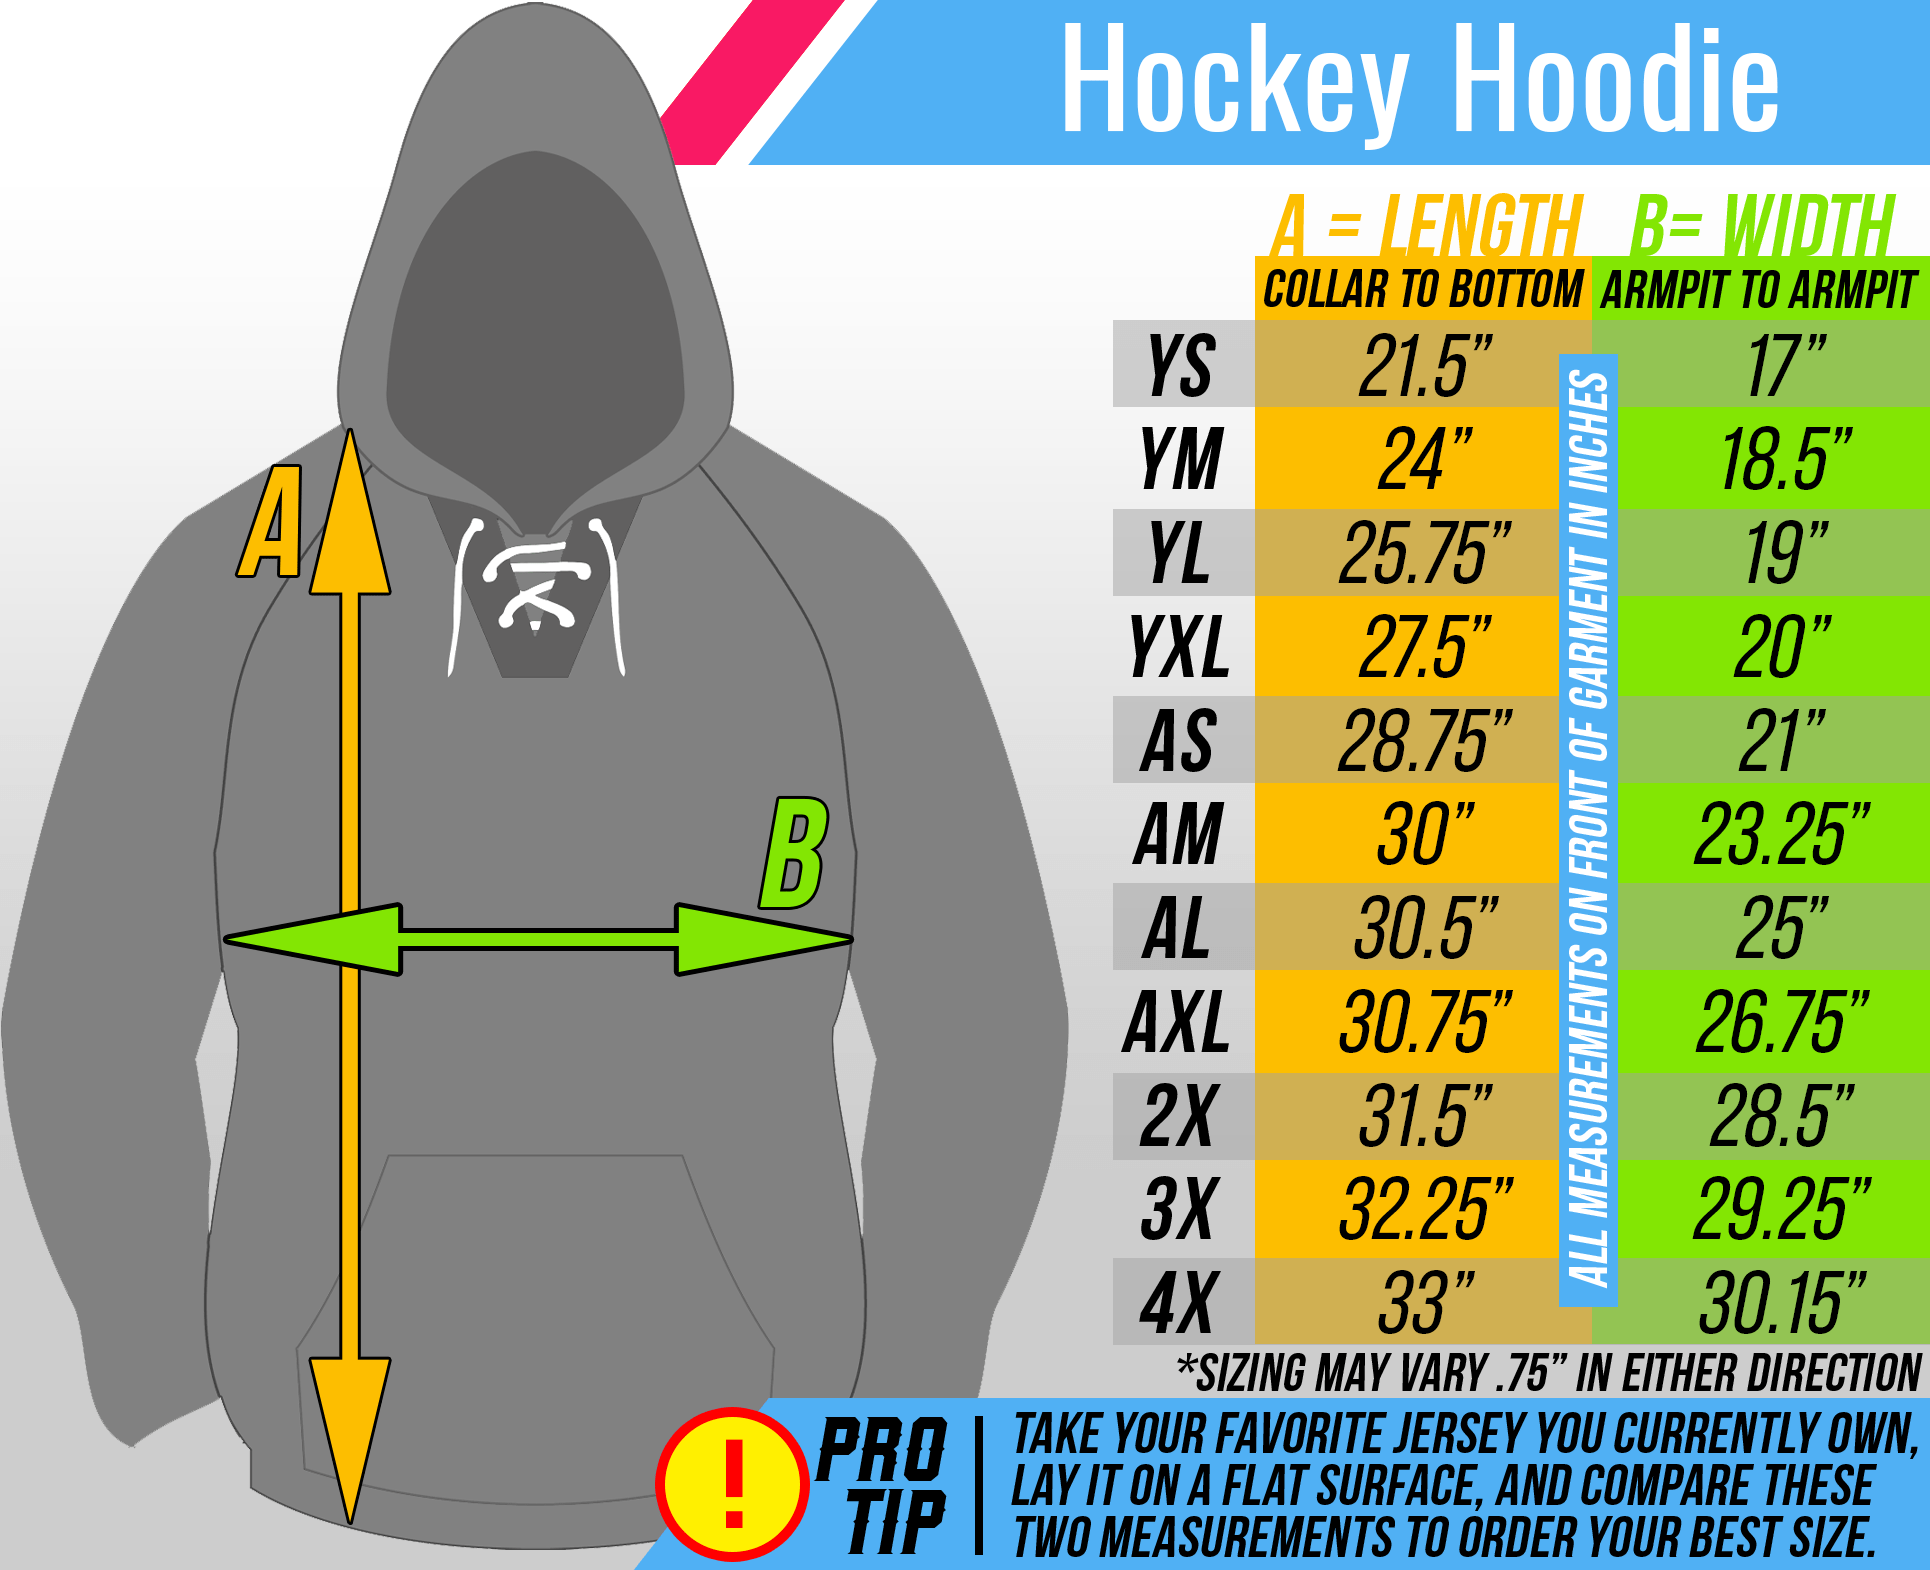 The Mighty Ducks Movie Goldberg Custom Hockey Jersey Sweater 